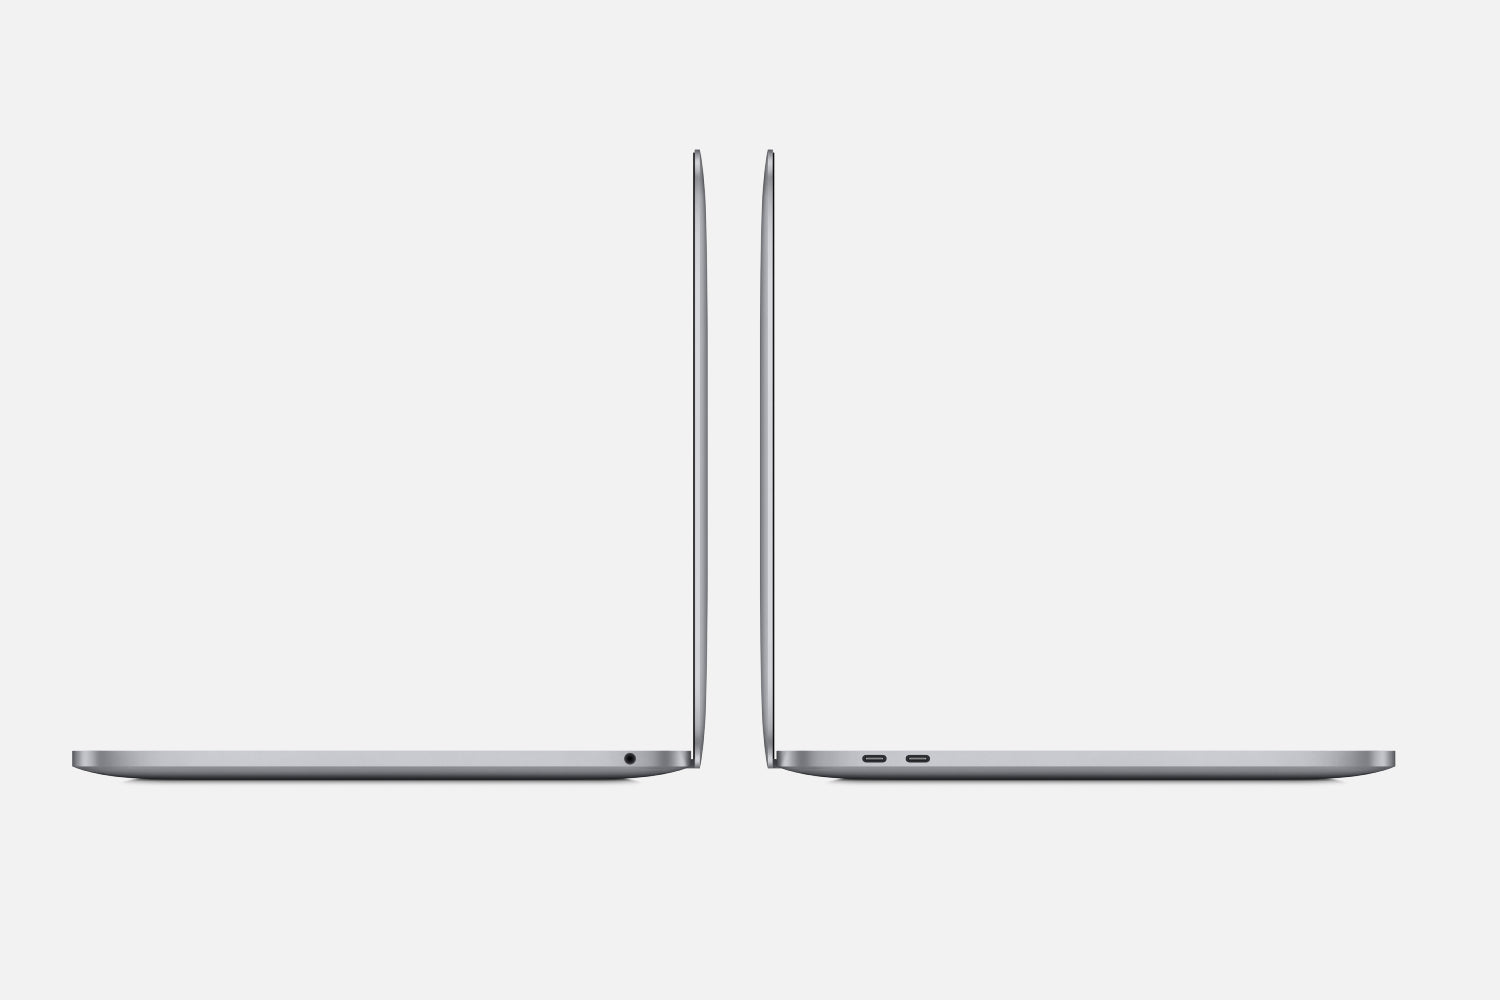 Apple MacBook Pro Laptop with M2 chip: 33.74 cm (13.3-inch) Retina Display, 8GB RAM, 256GB SSD Storage, Space Grey -Laptops-Apple-computerspace